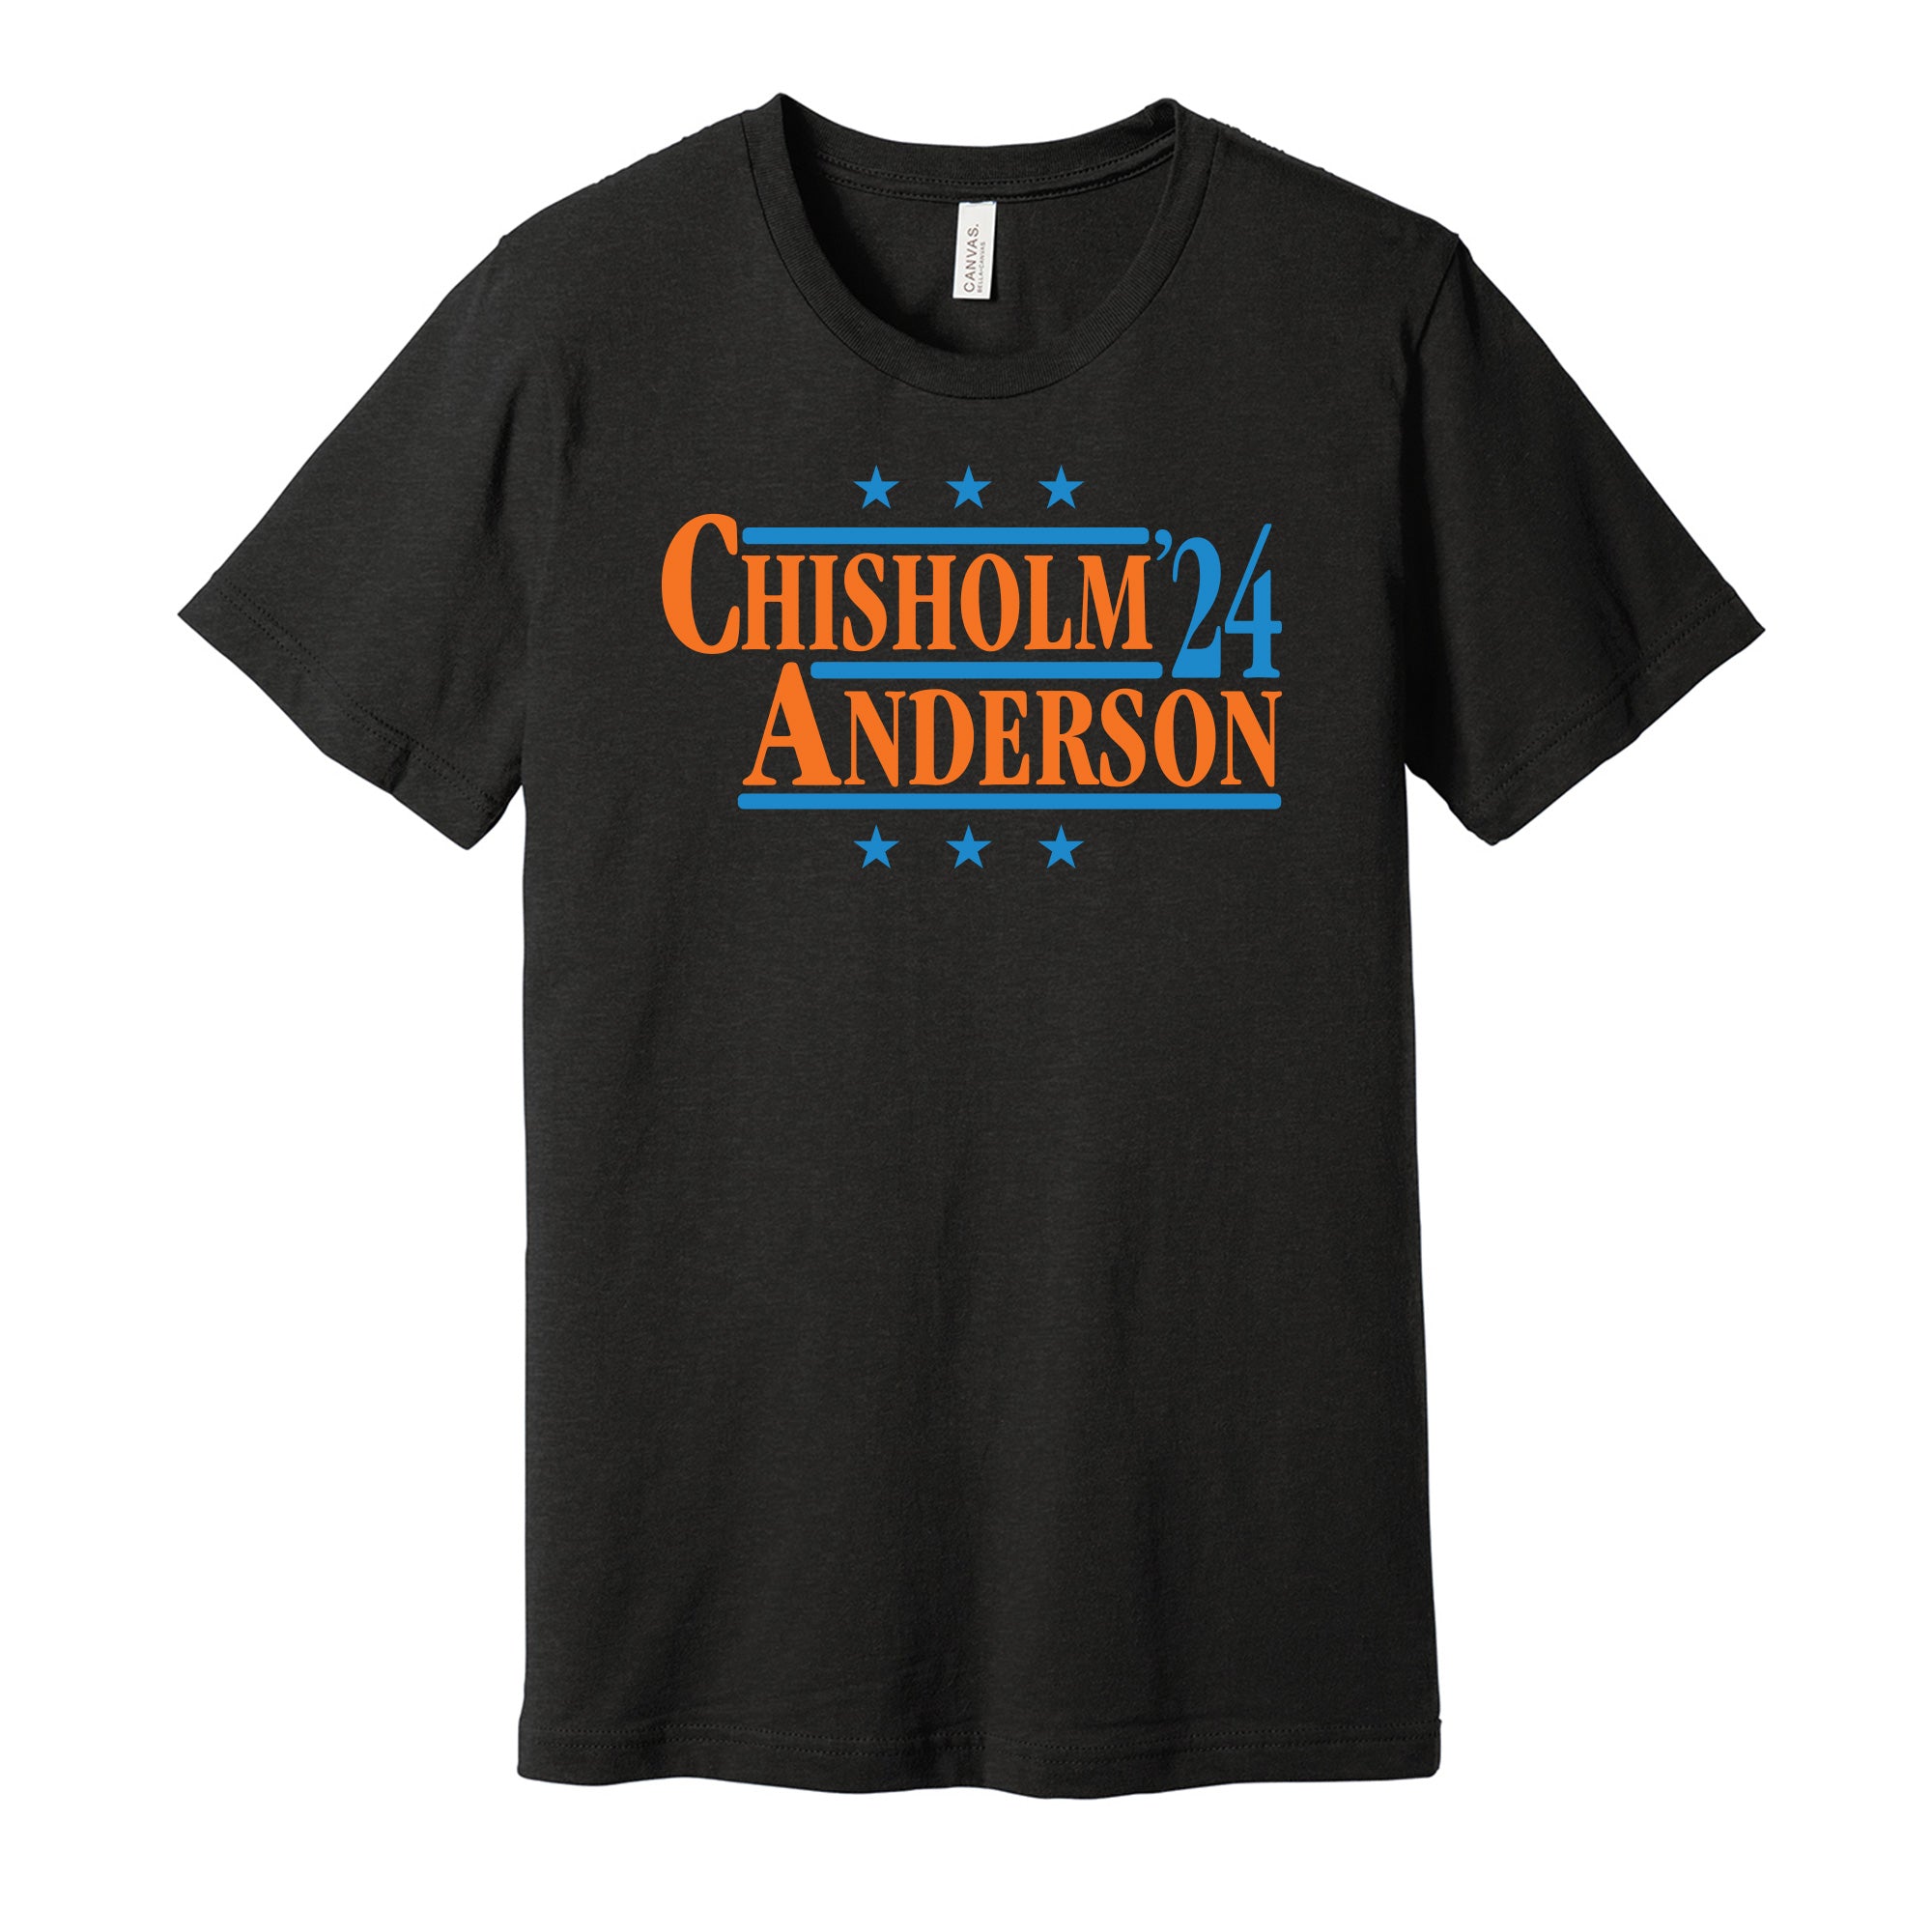 Official Jazz chisholm miamI marlins baseball retro '90s T-shirt